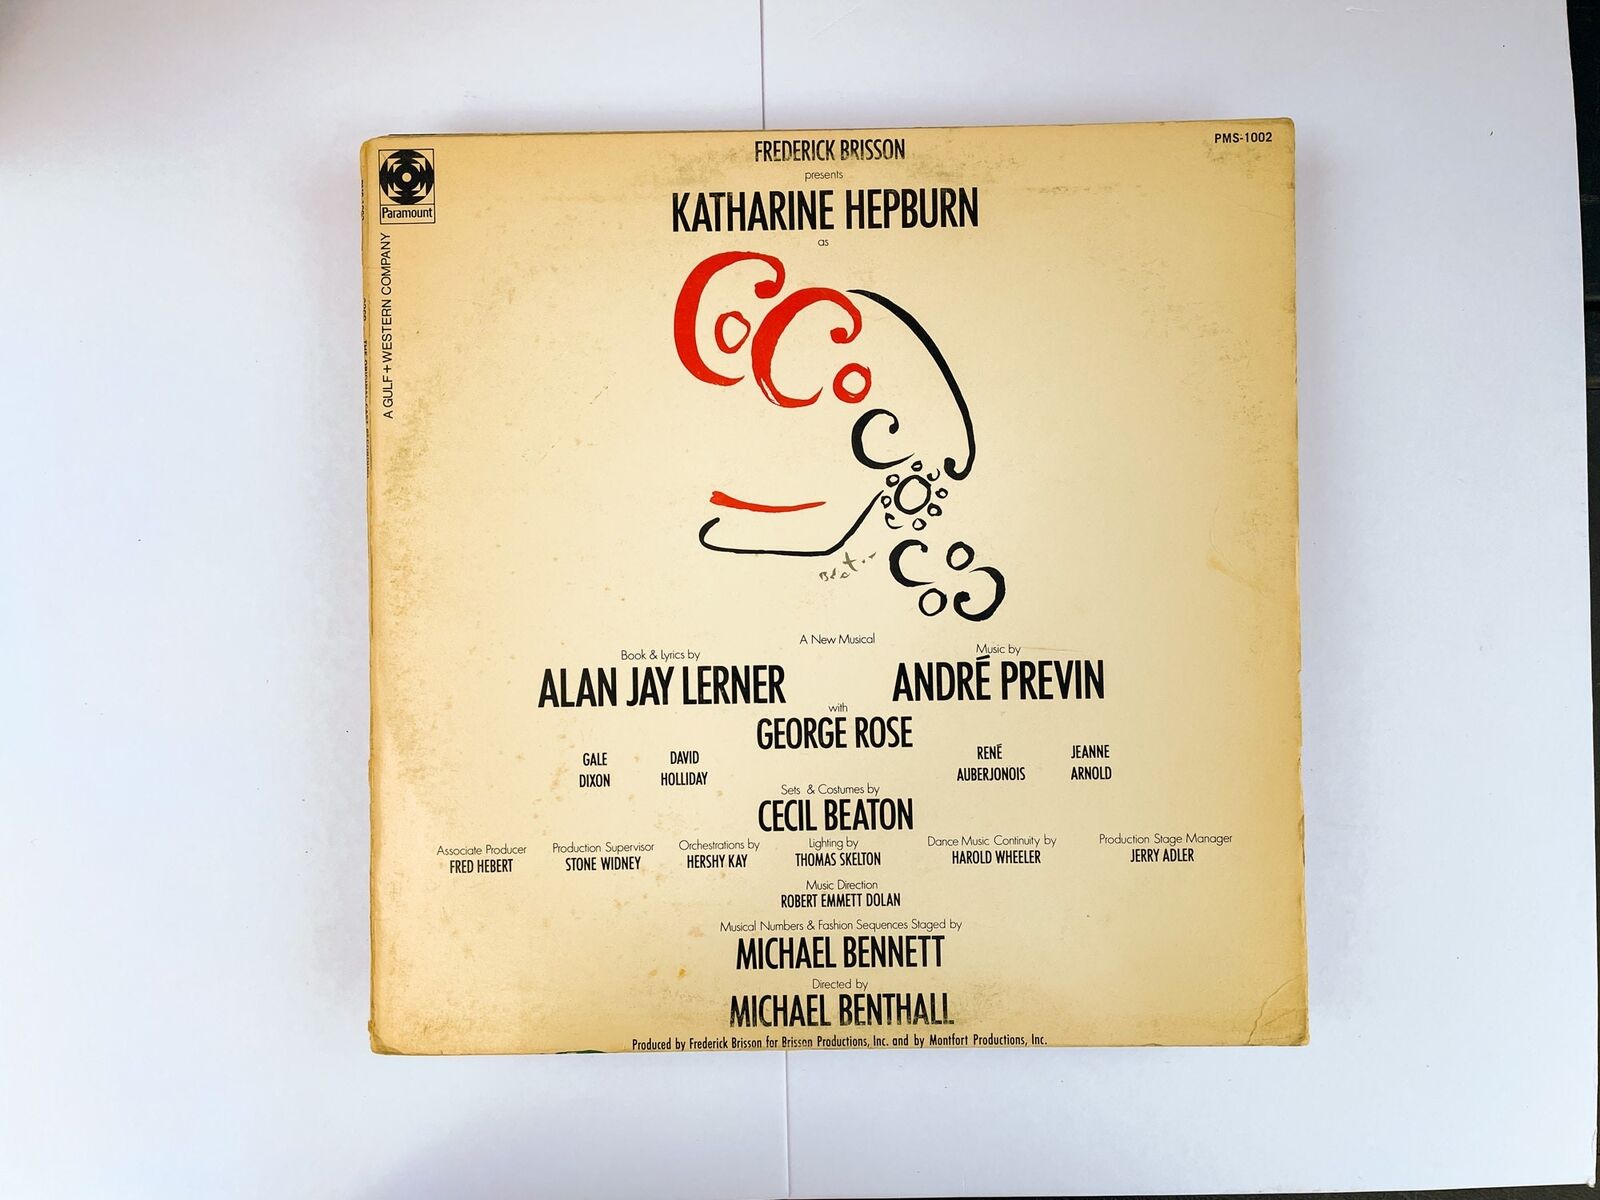 Katharine Hepburn - Coco - The Original Broadway Cast Recording - Vinyl LP Reco